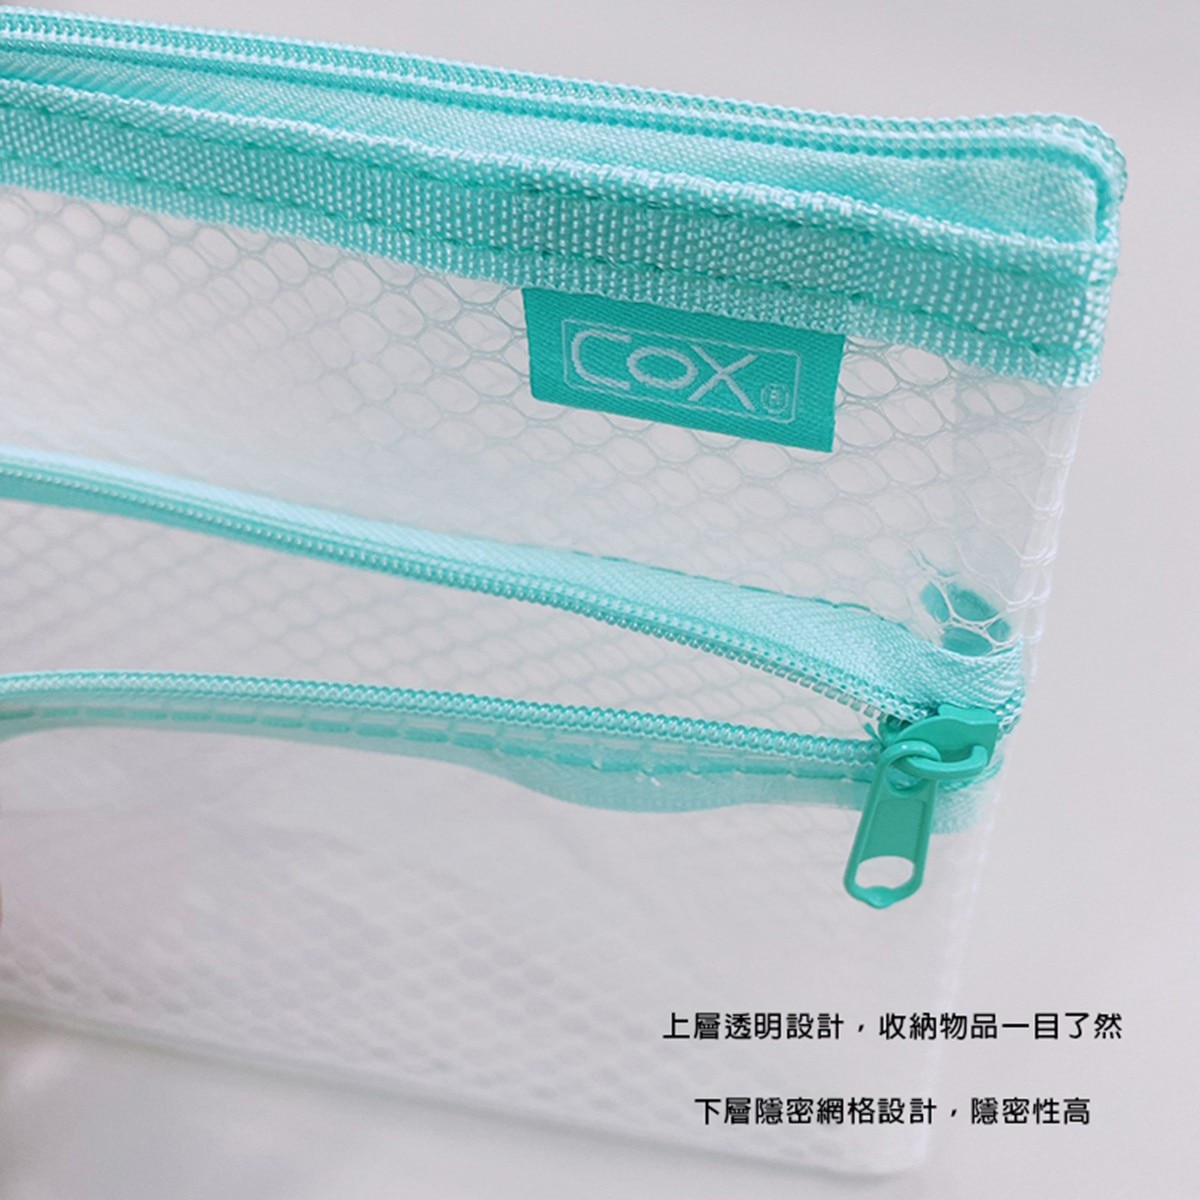 COX B5環保雙層【網格+透明】收納拉鍊袋 綠，EVA環保材質，安全無毒，貼心收納、多樣收納一袋搞定。